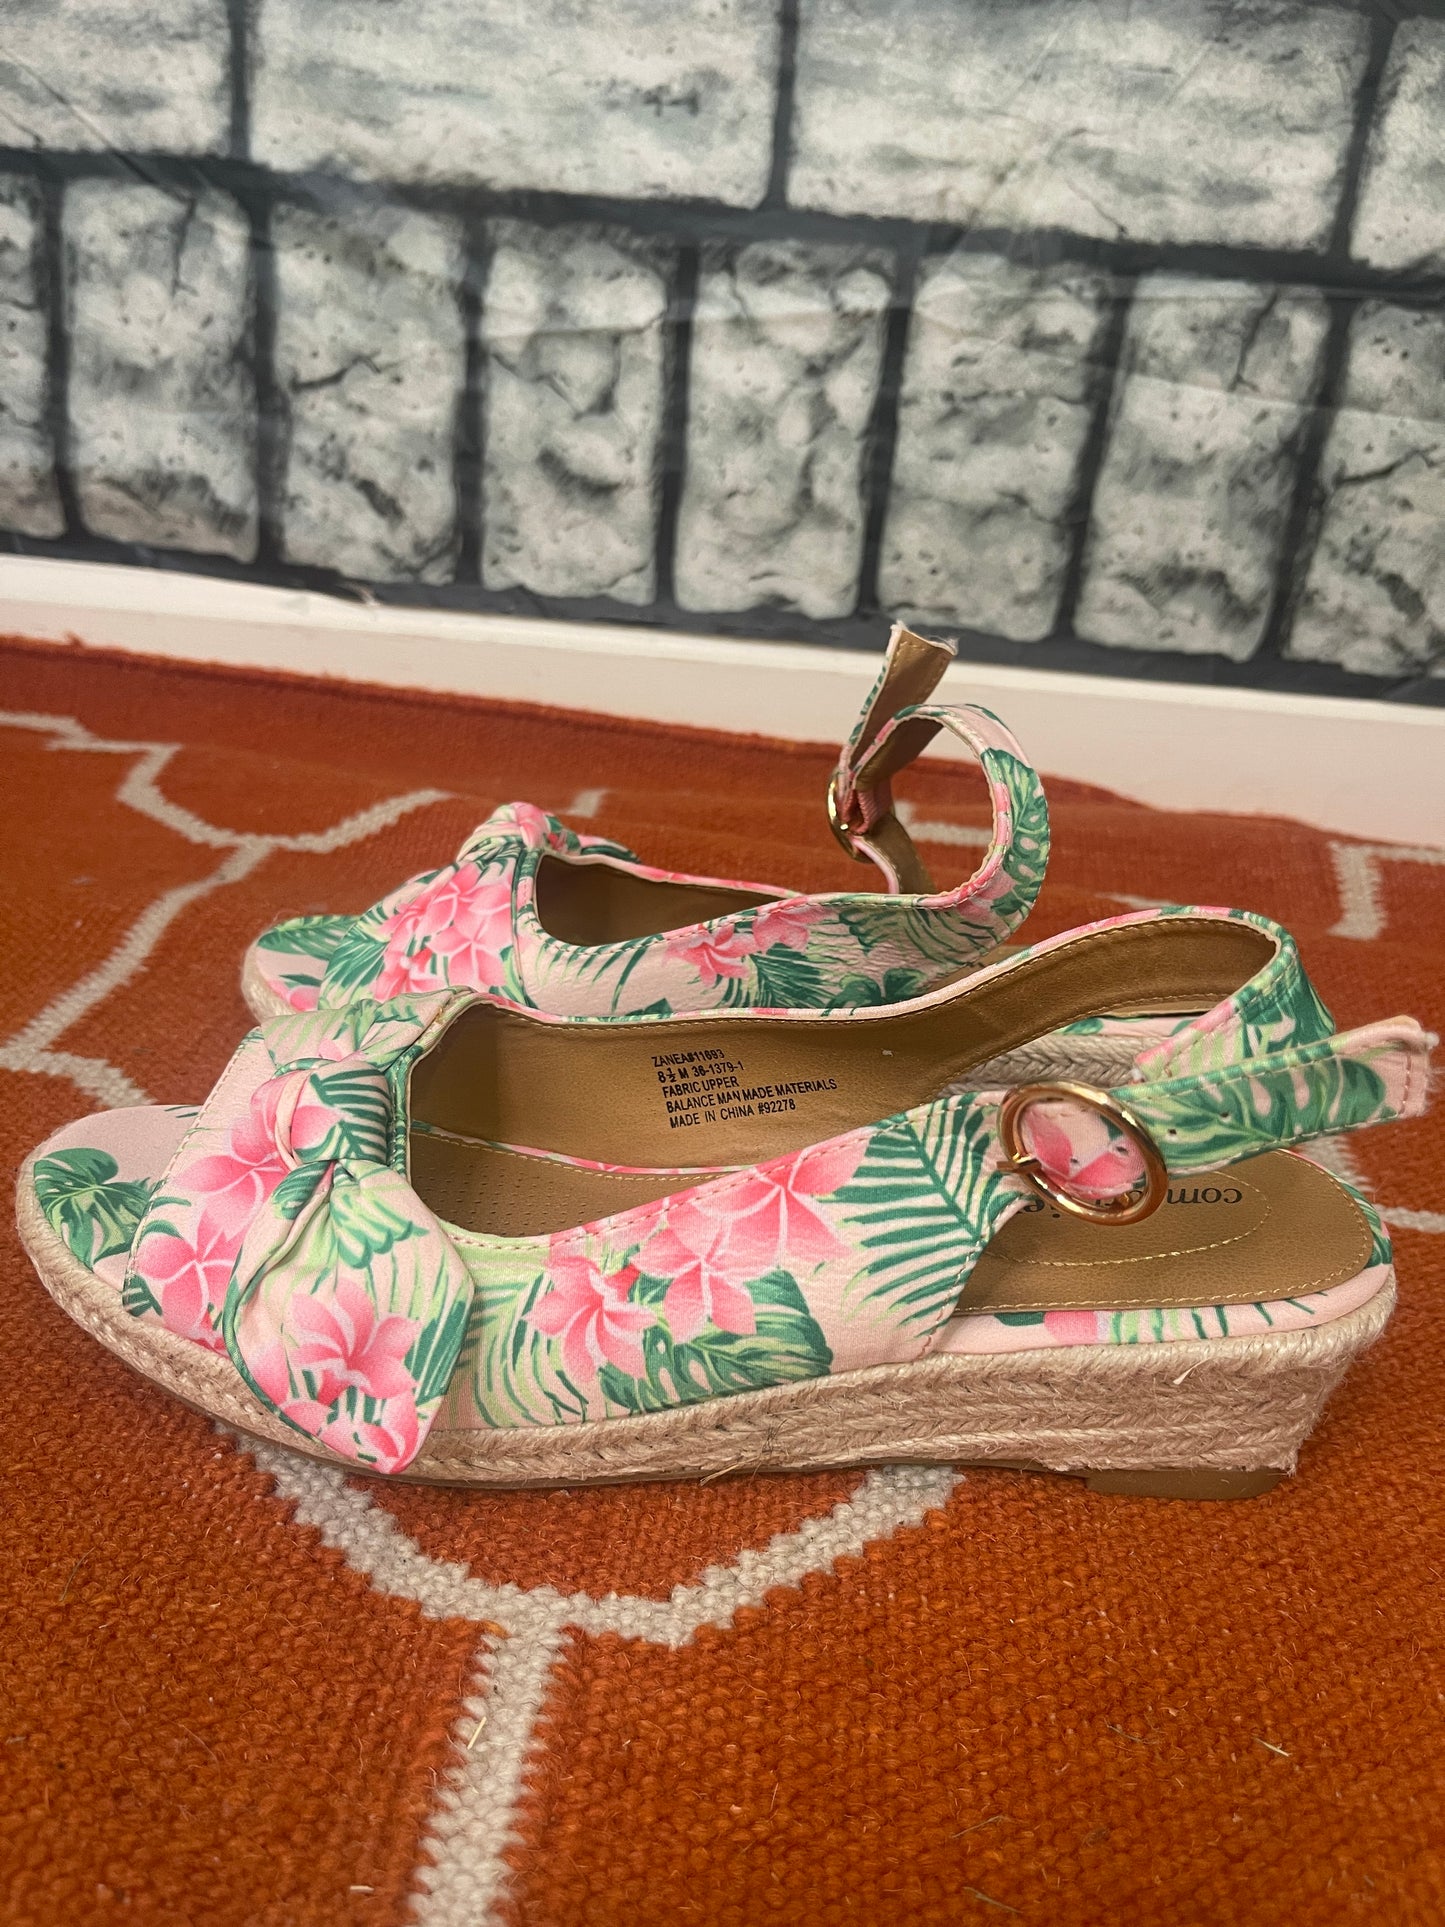 New Comfort view sandals pink green women sz 8.5